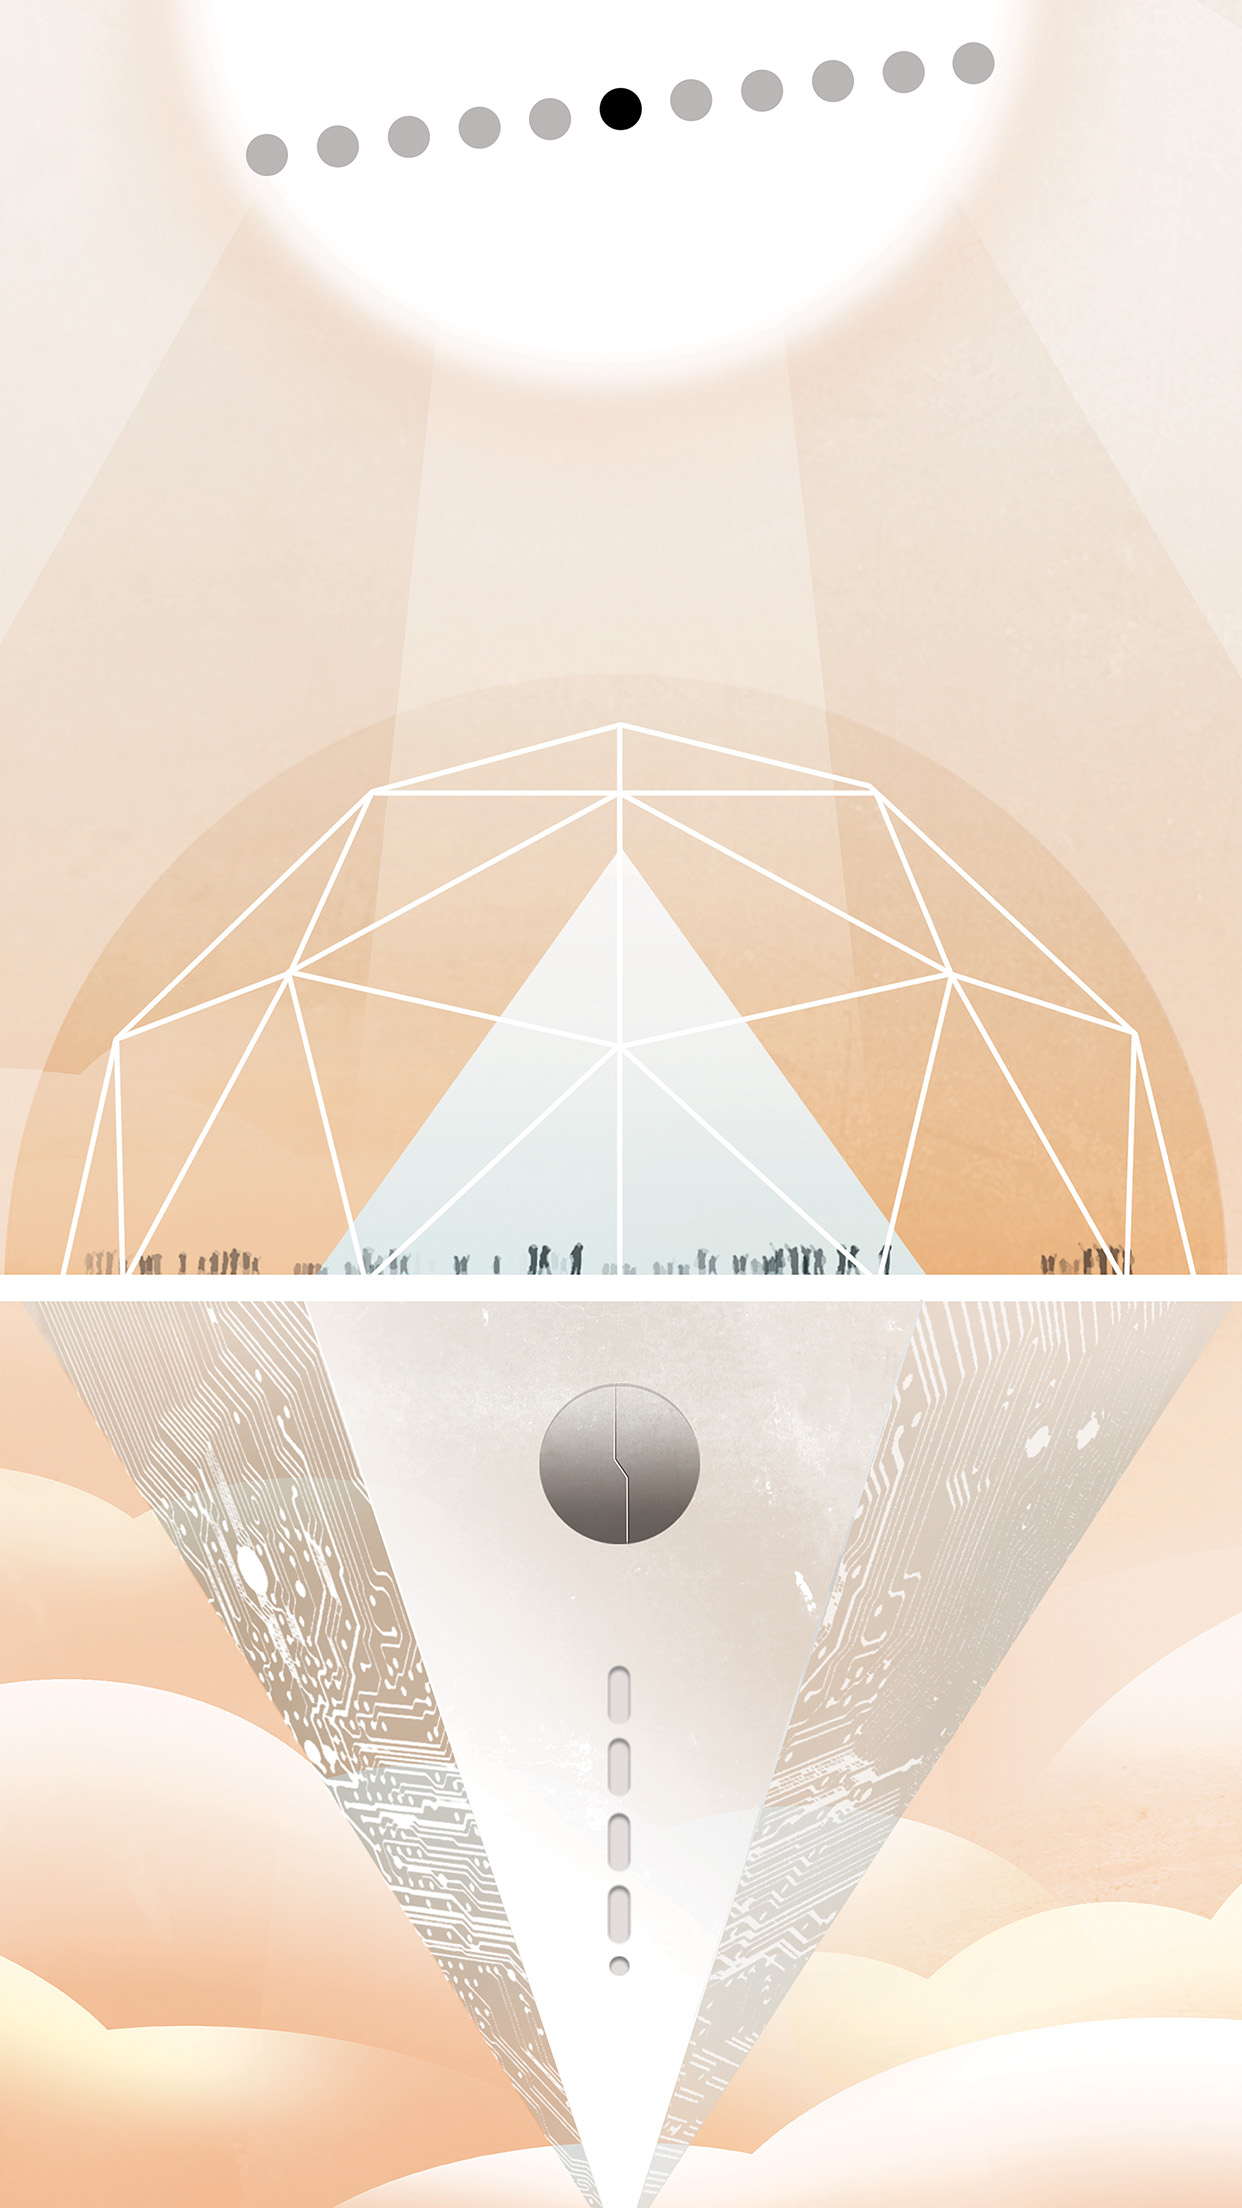 Venus Pink Art Illustration Nasa Space Android wallpaper